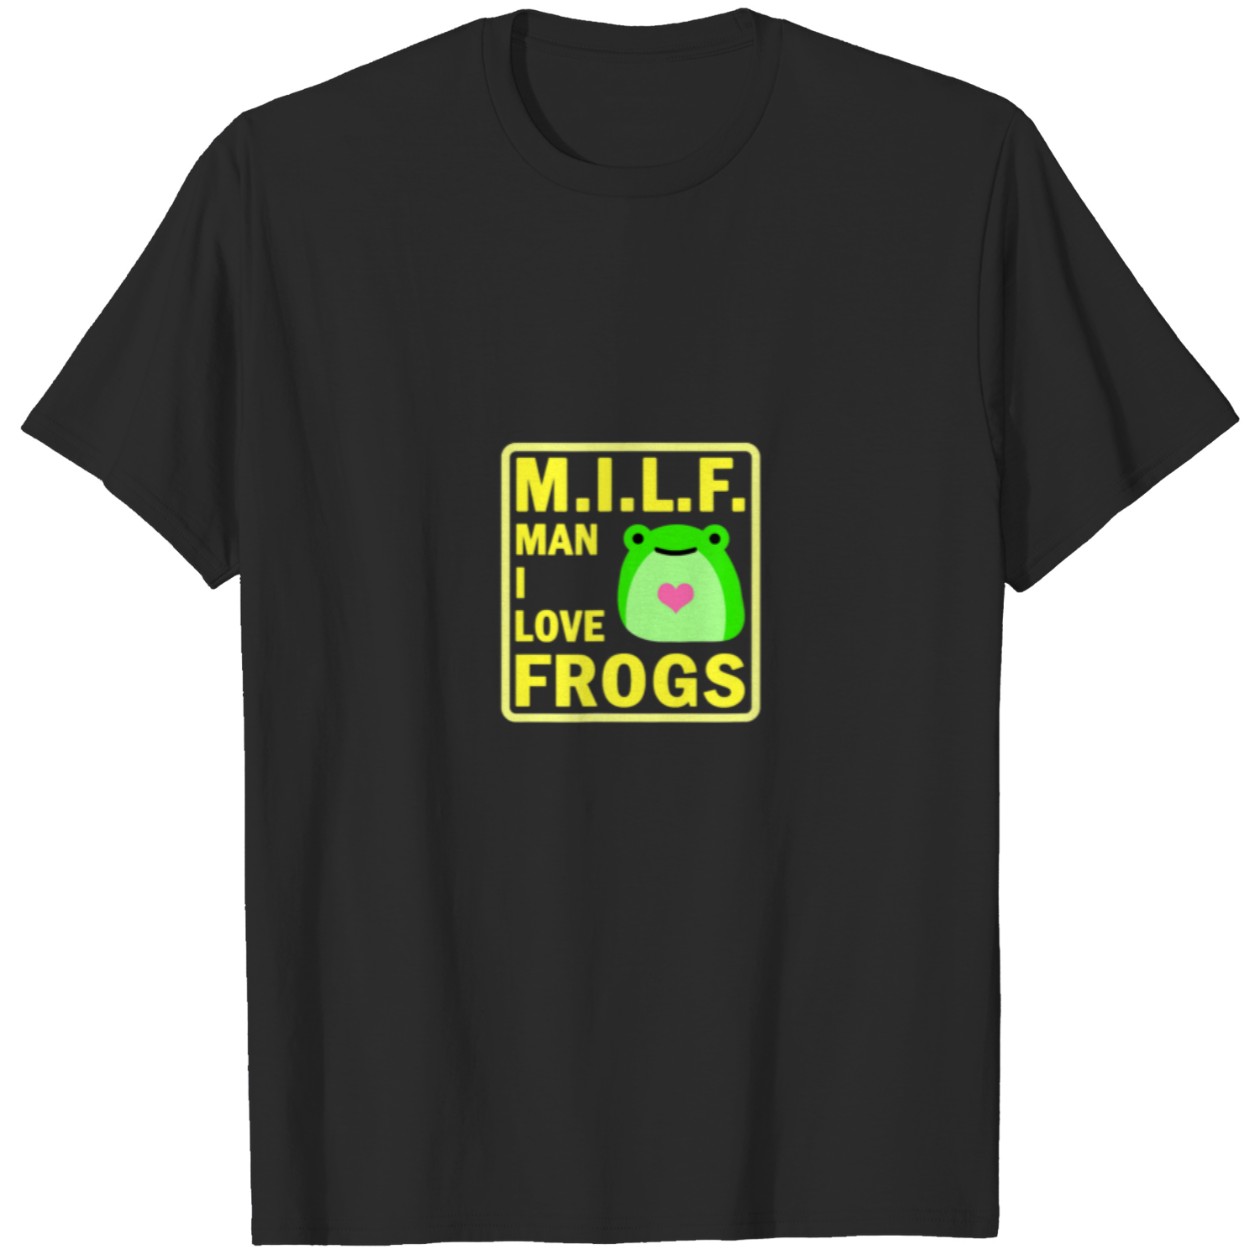 Man I Love Frogs Funny Kawaii Cute Graphic Tee T-Shirt DZT10